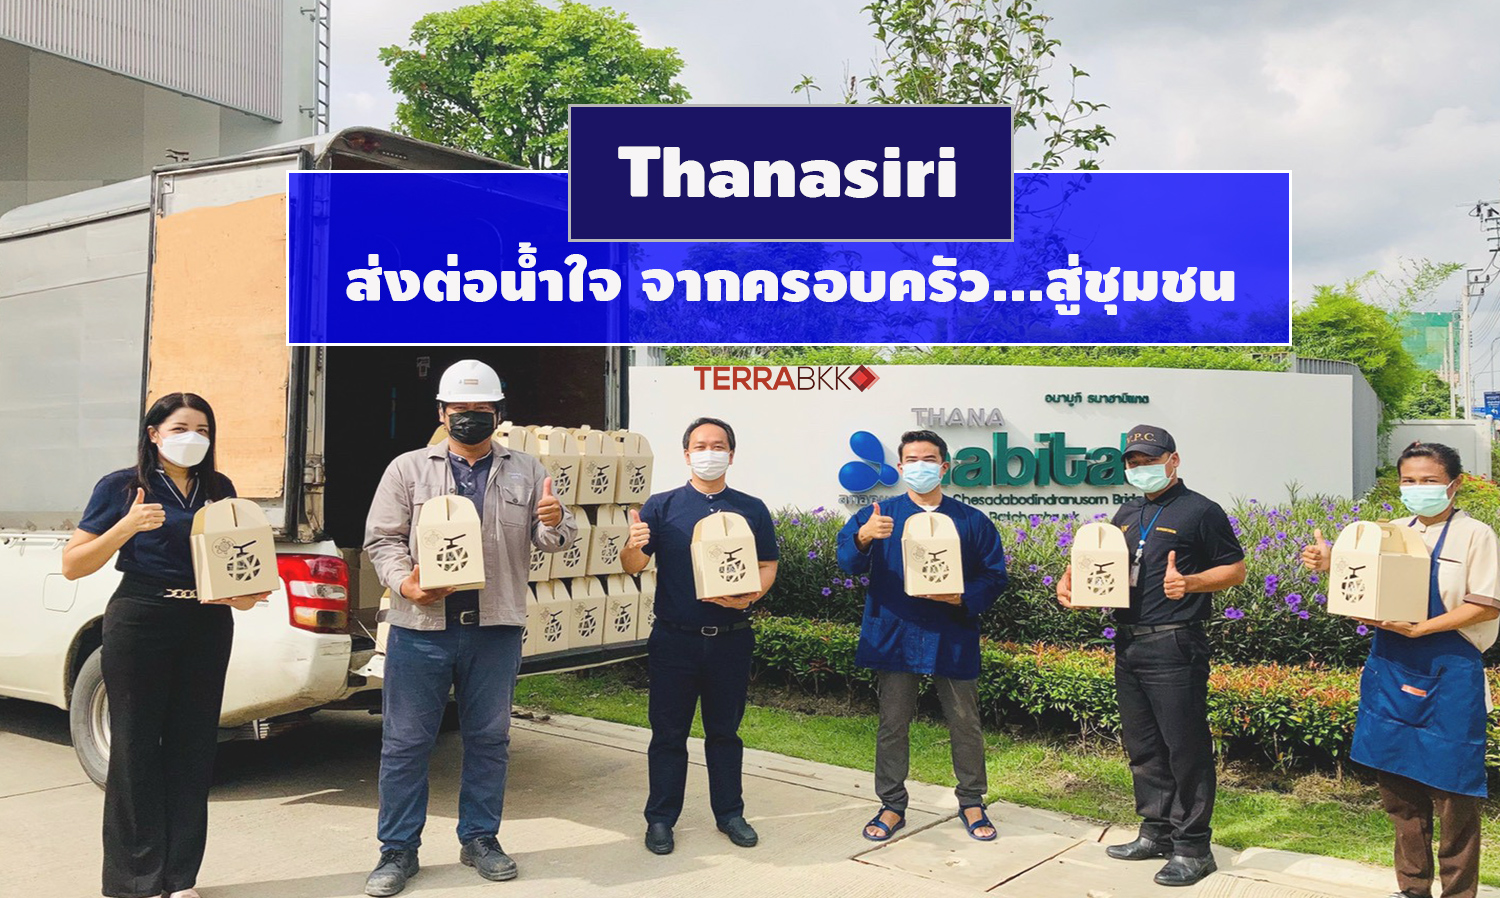 thanasiri-ส่งต่อน้ำใจ-จากครอบครัว-สู่ชุมชน